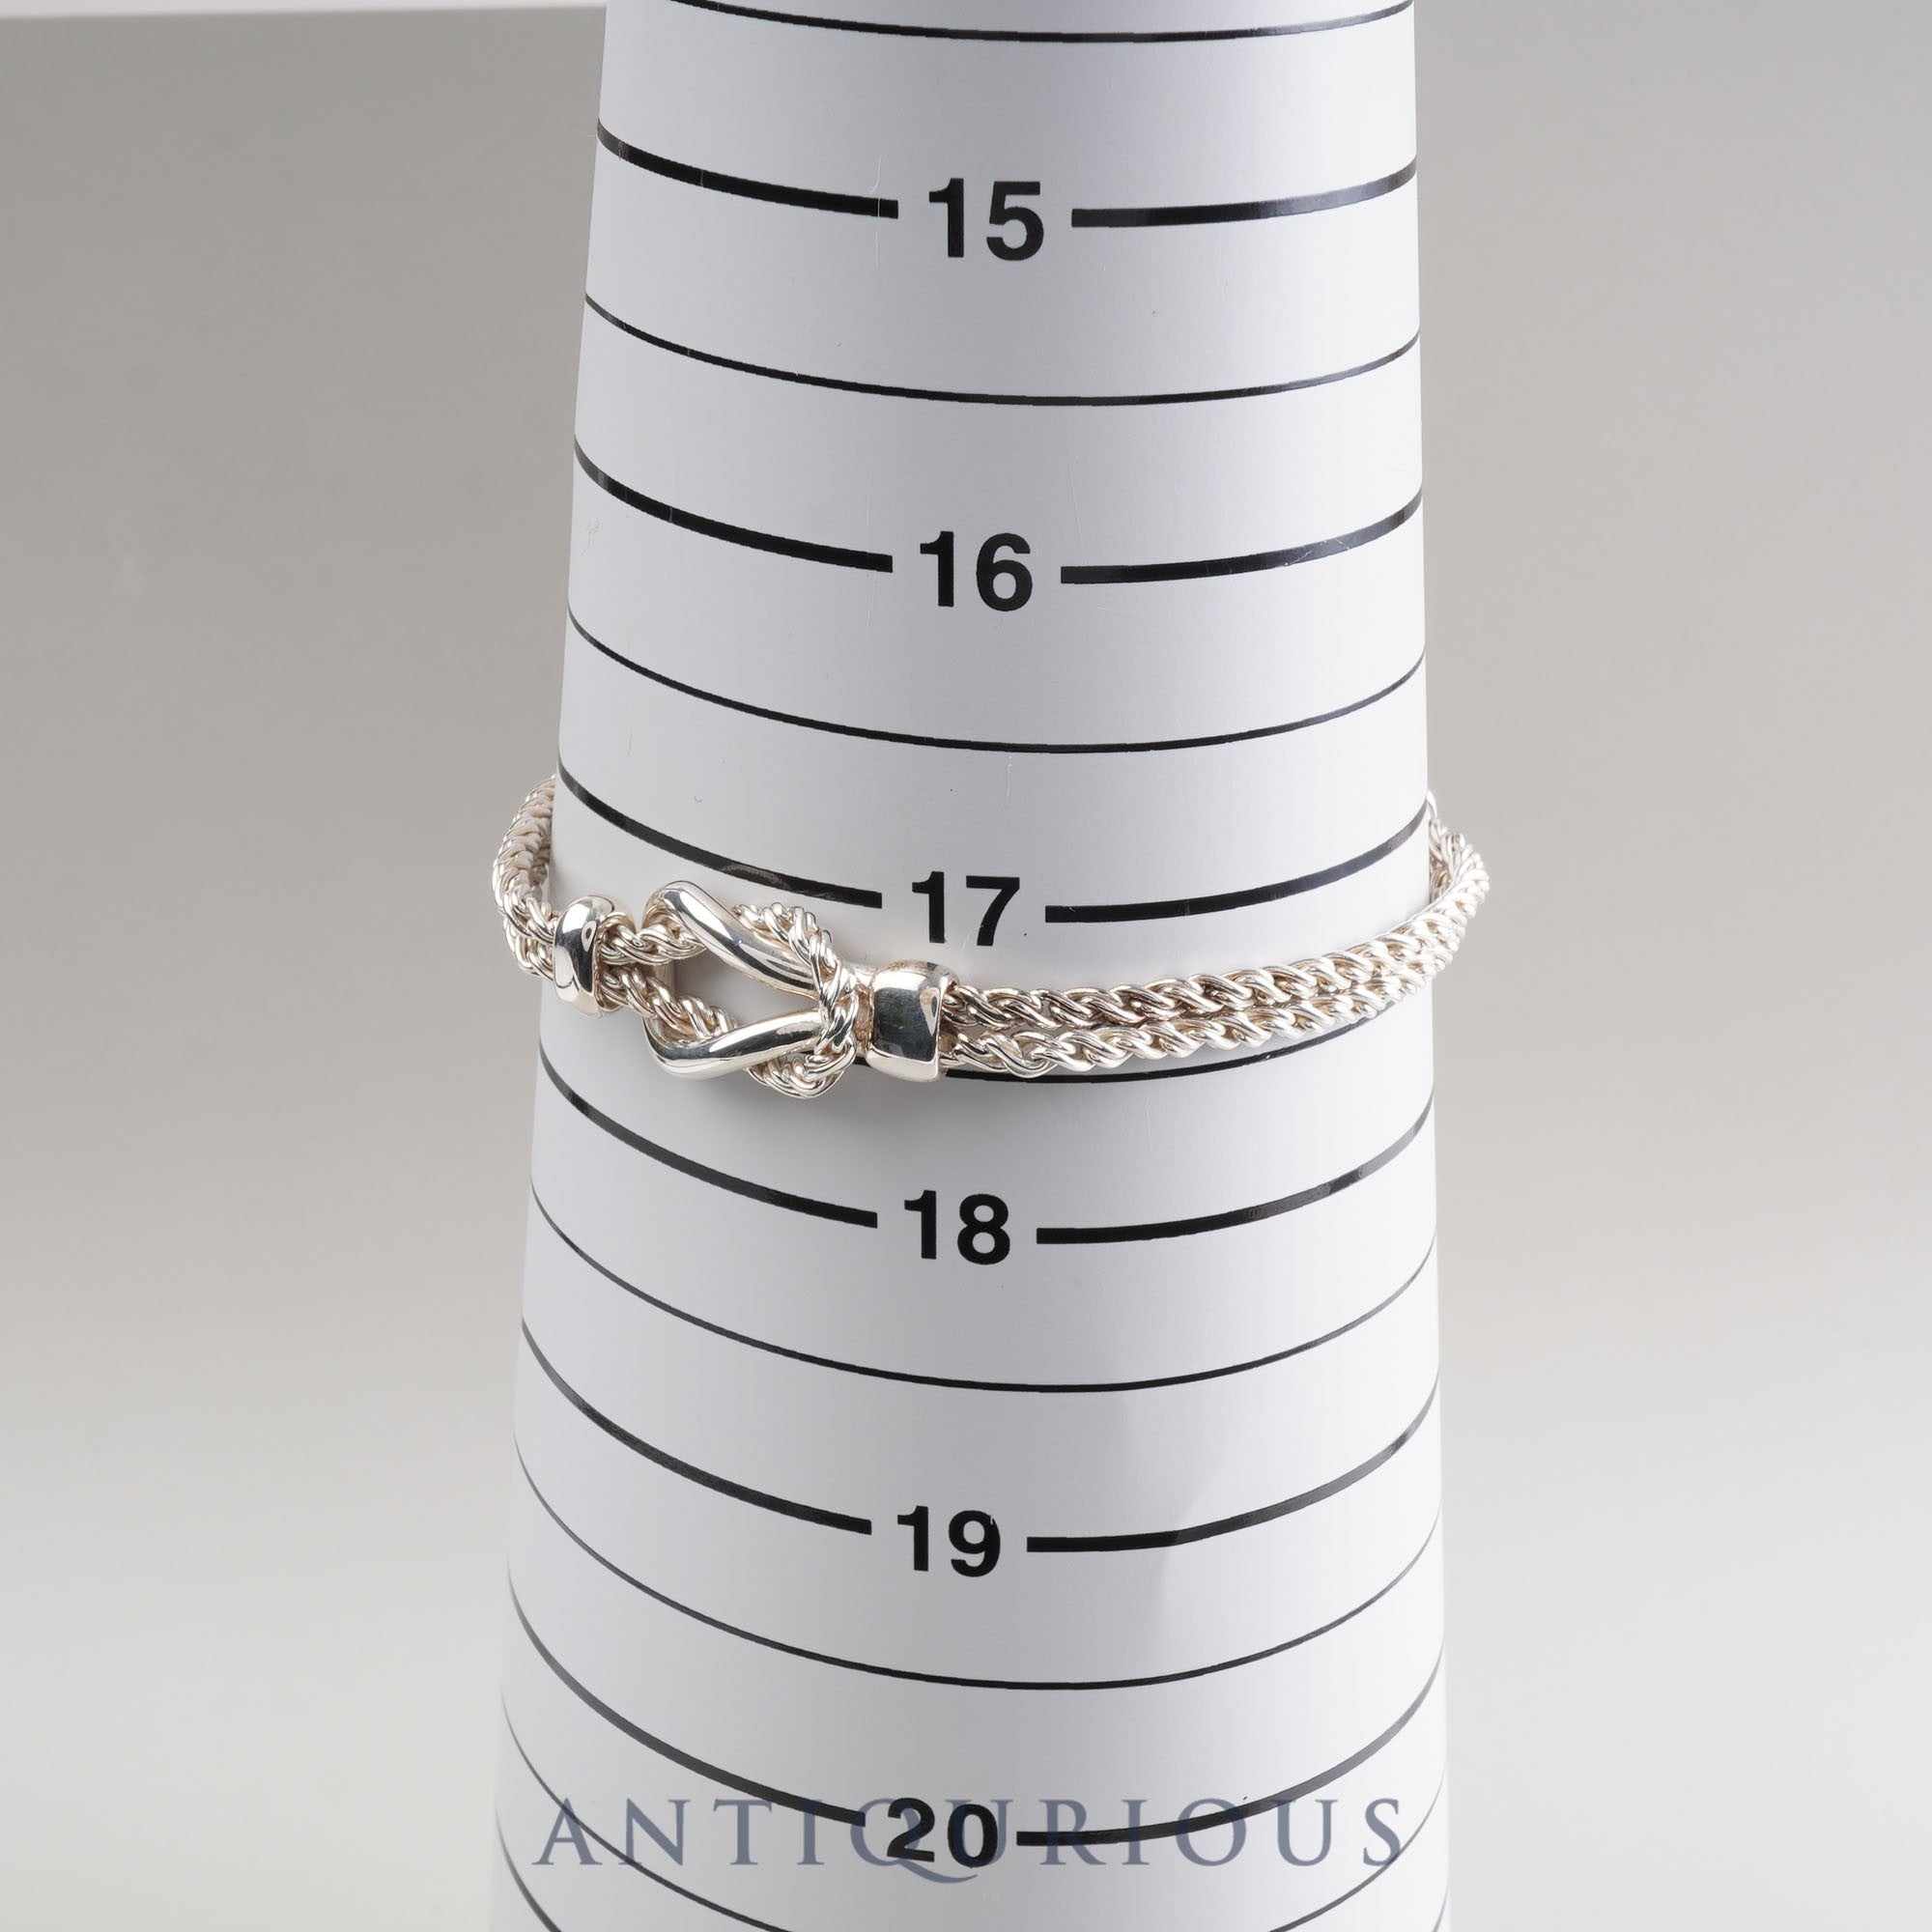 TIFFANY Tiffany bracelet/bangle double rope